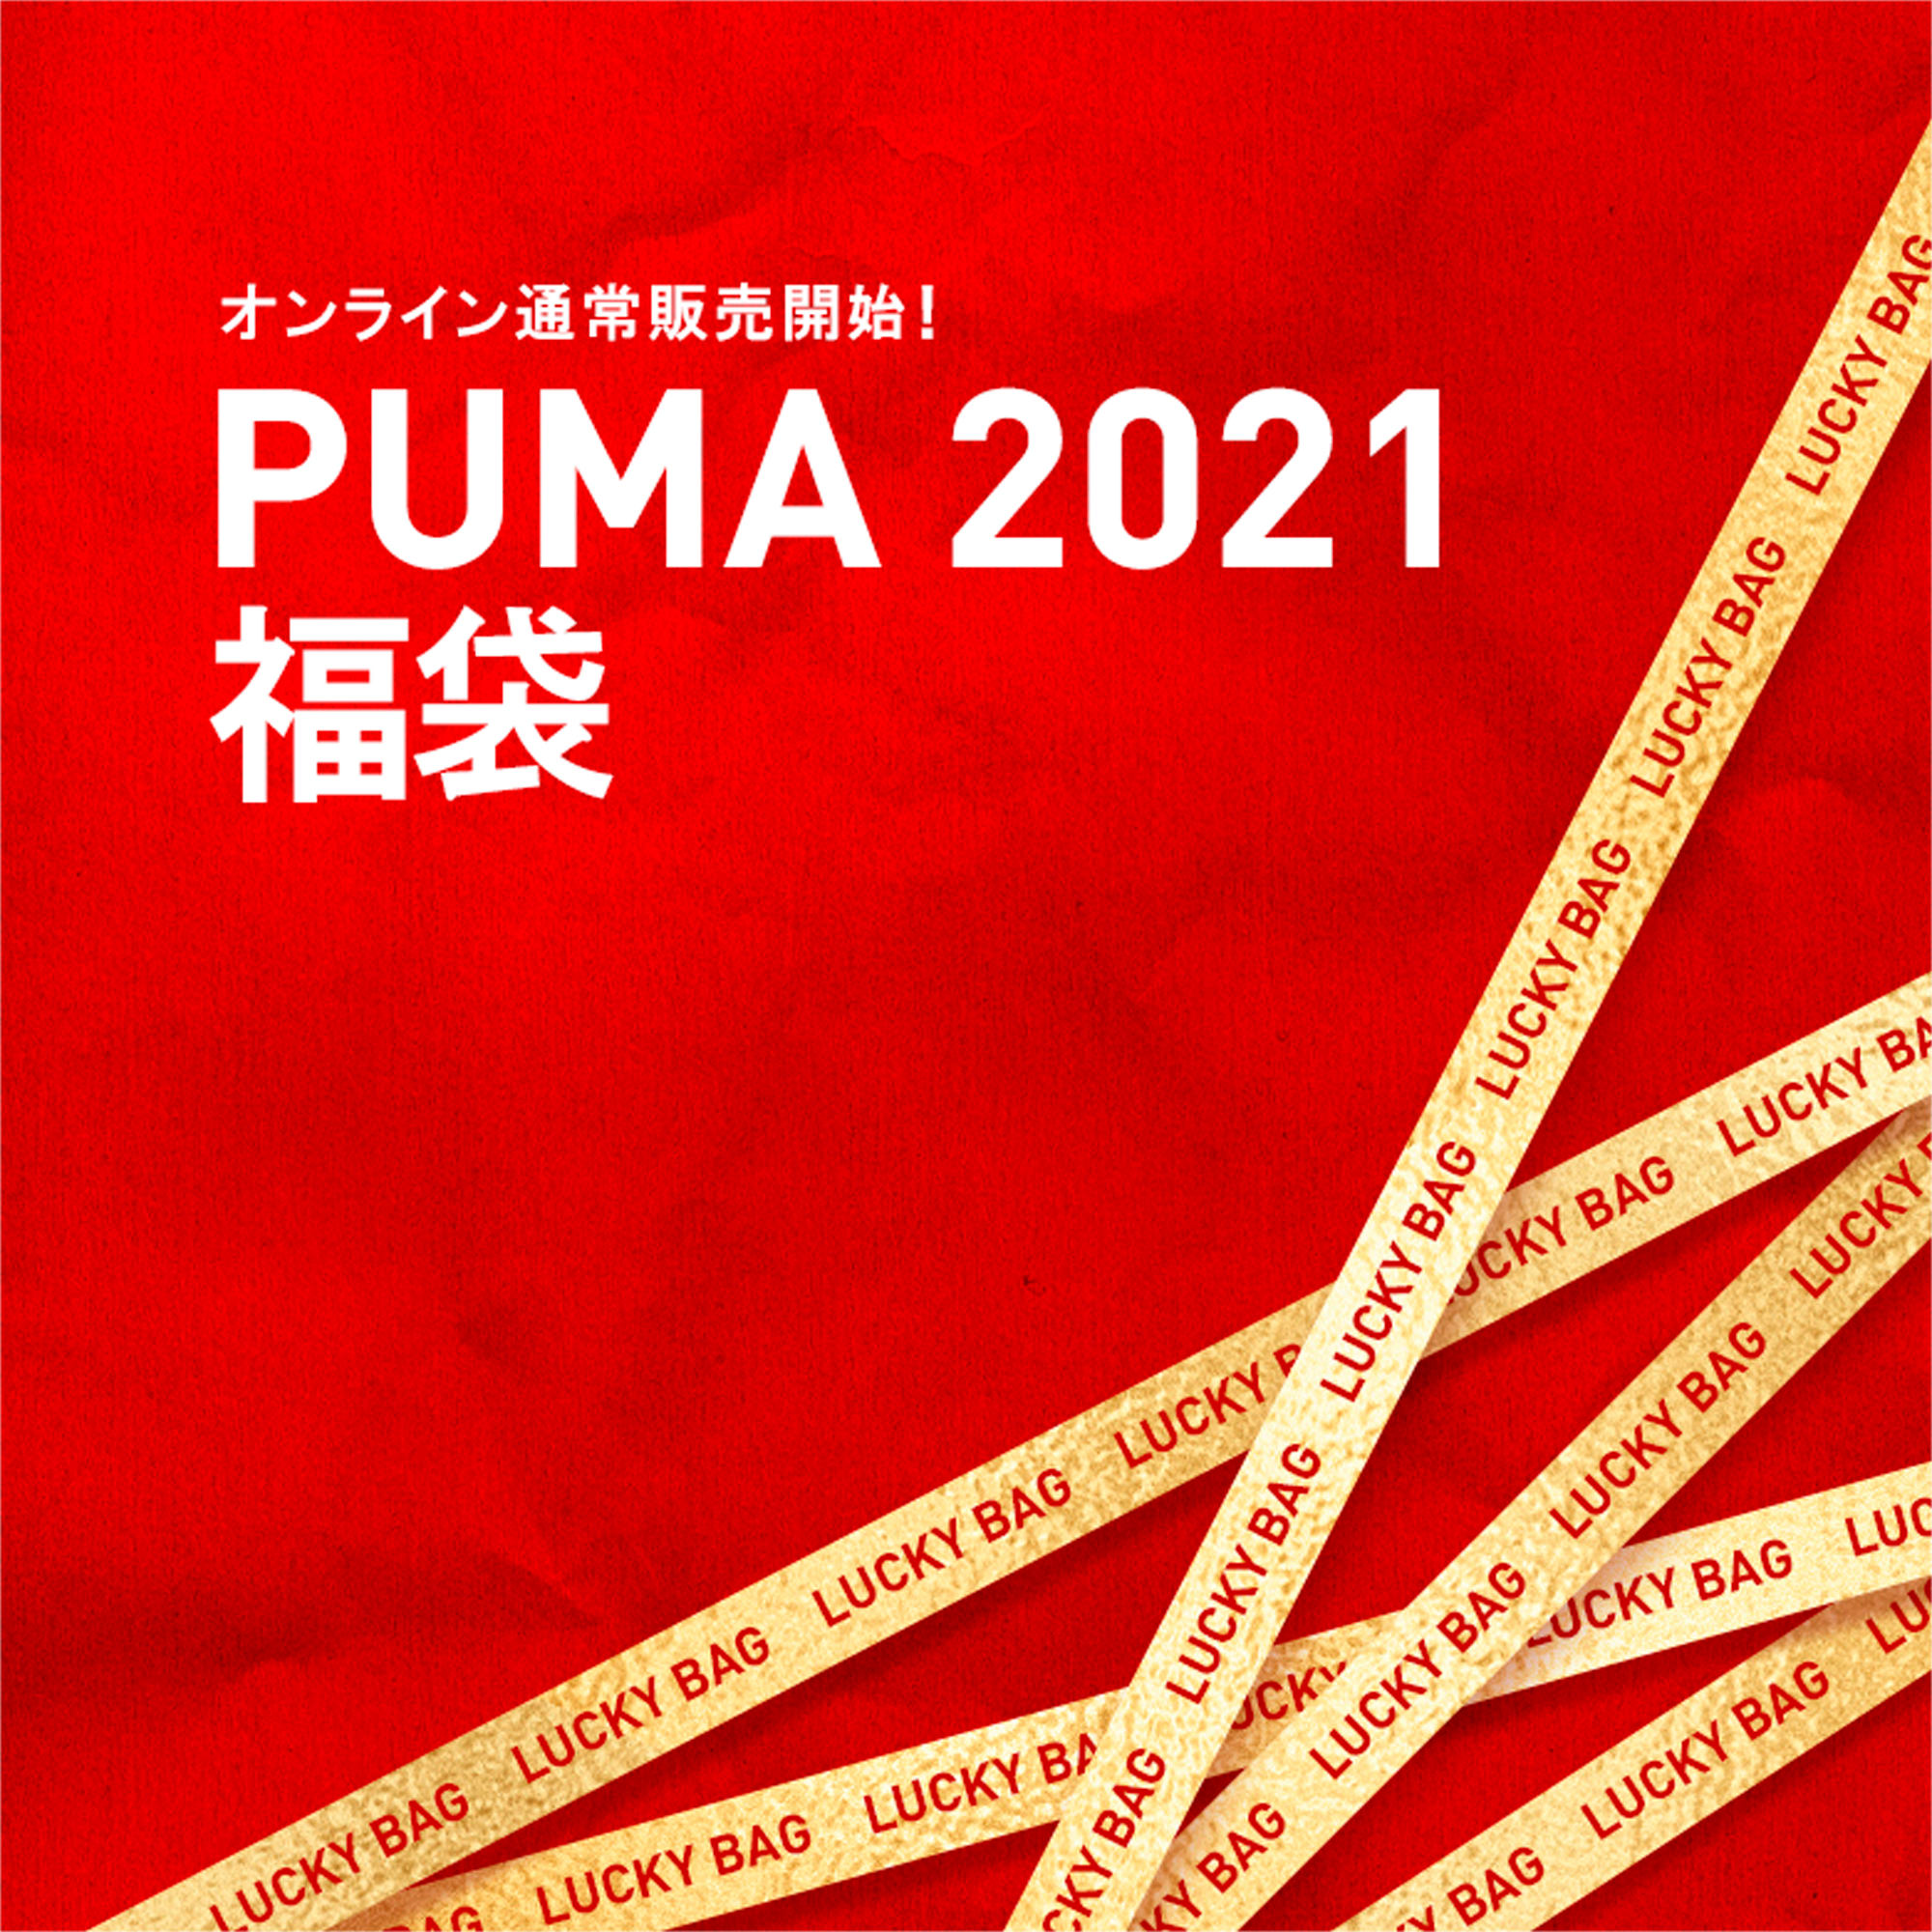 Puma公式 21 メンズ 福袋 Lucky Bag メンズ Black プーマ セール プーマ